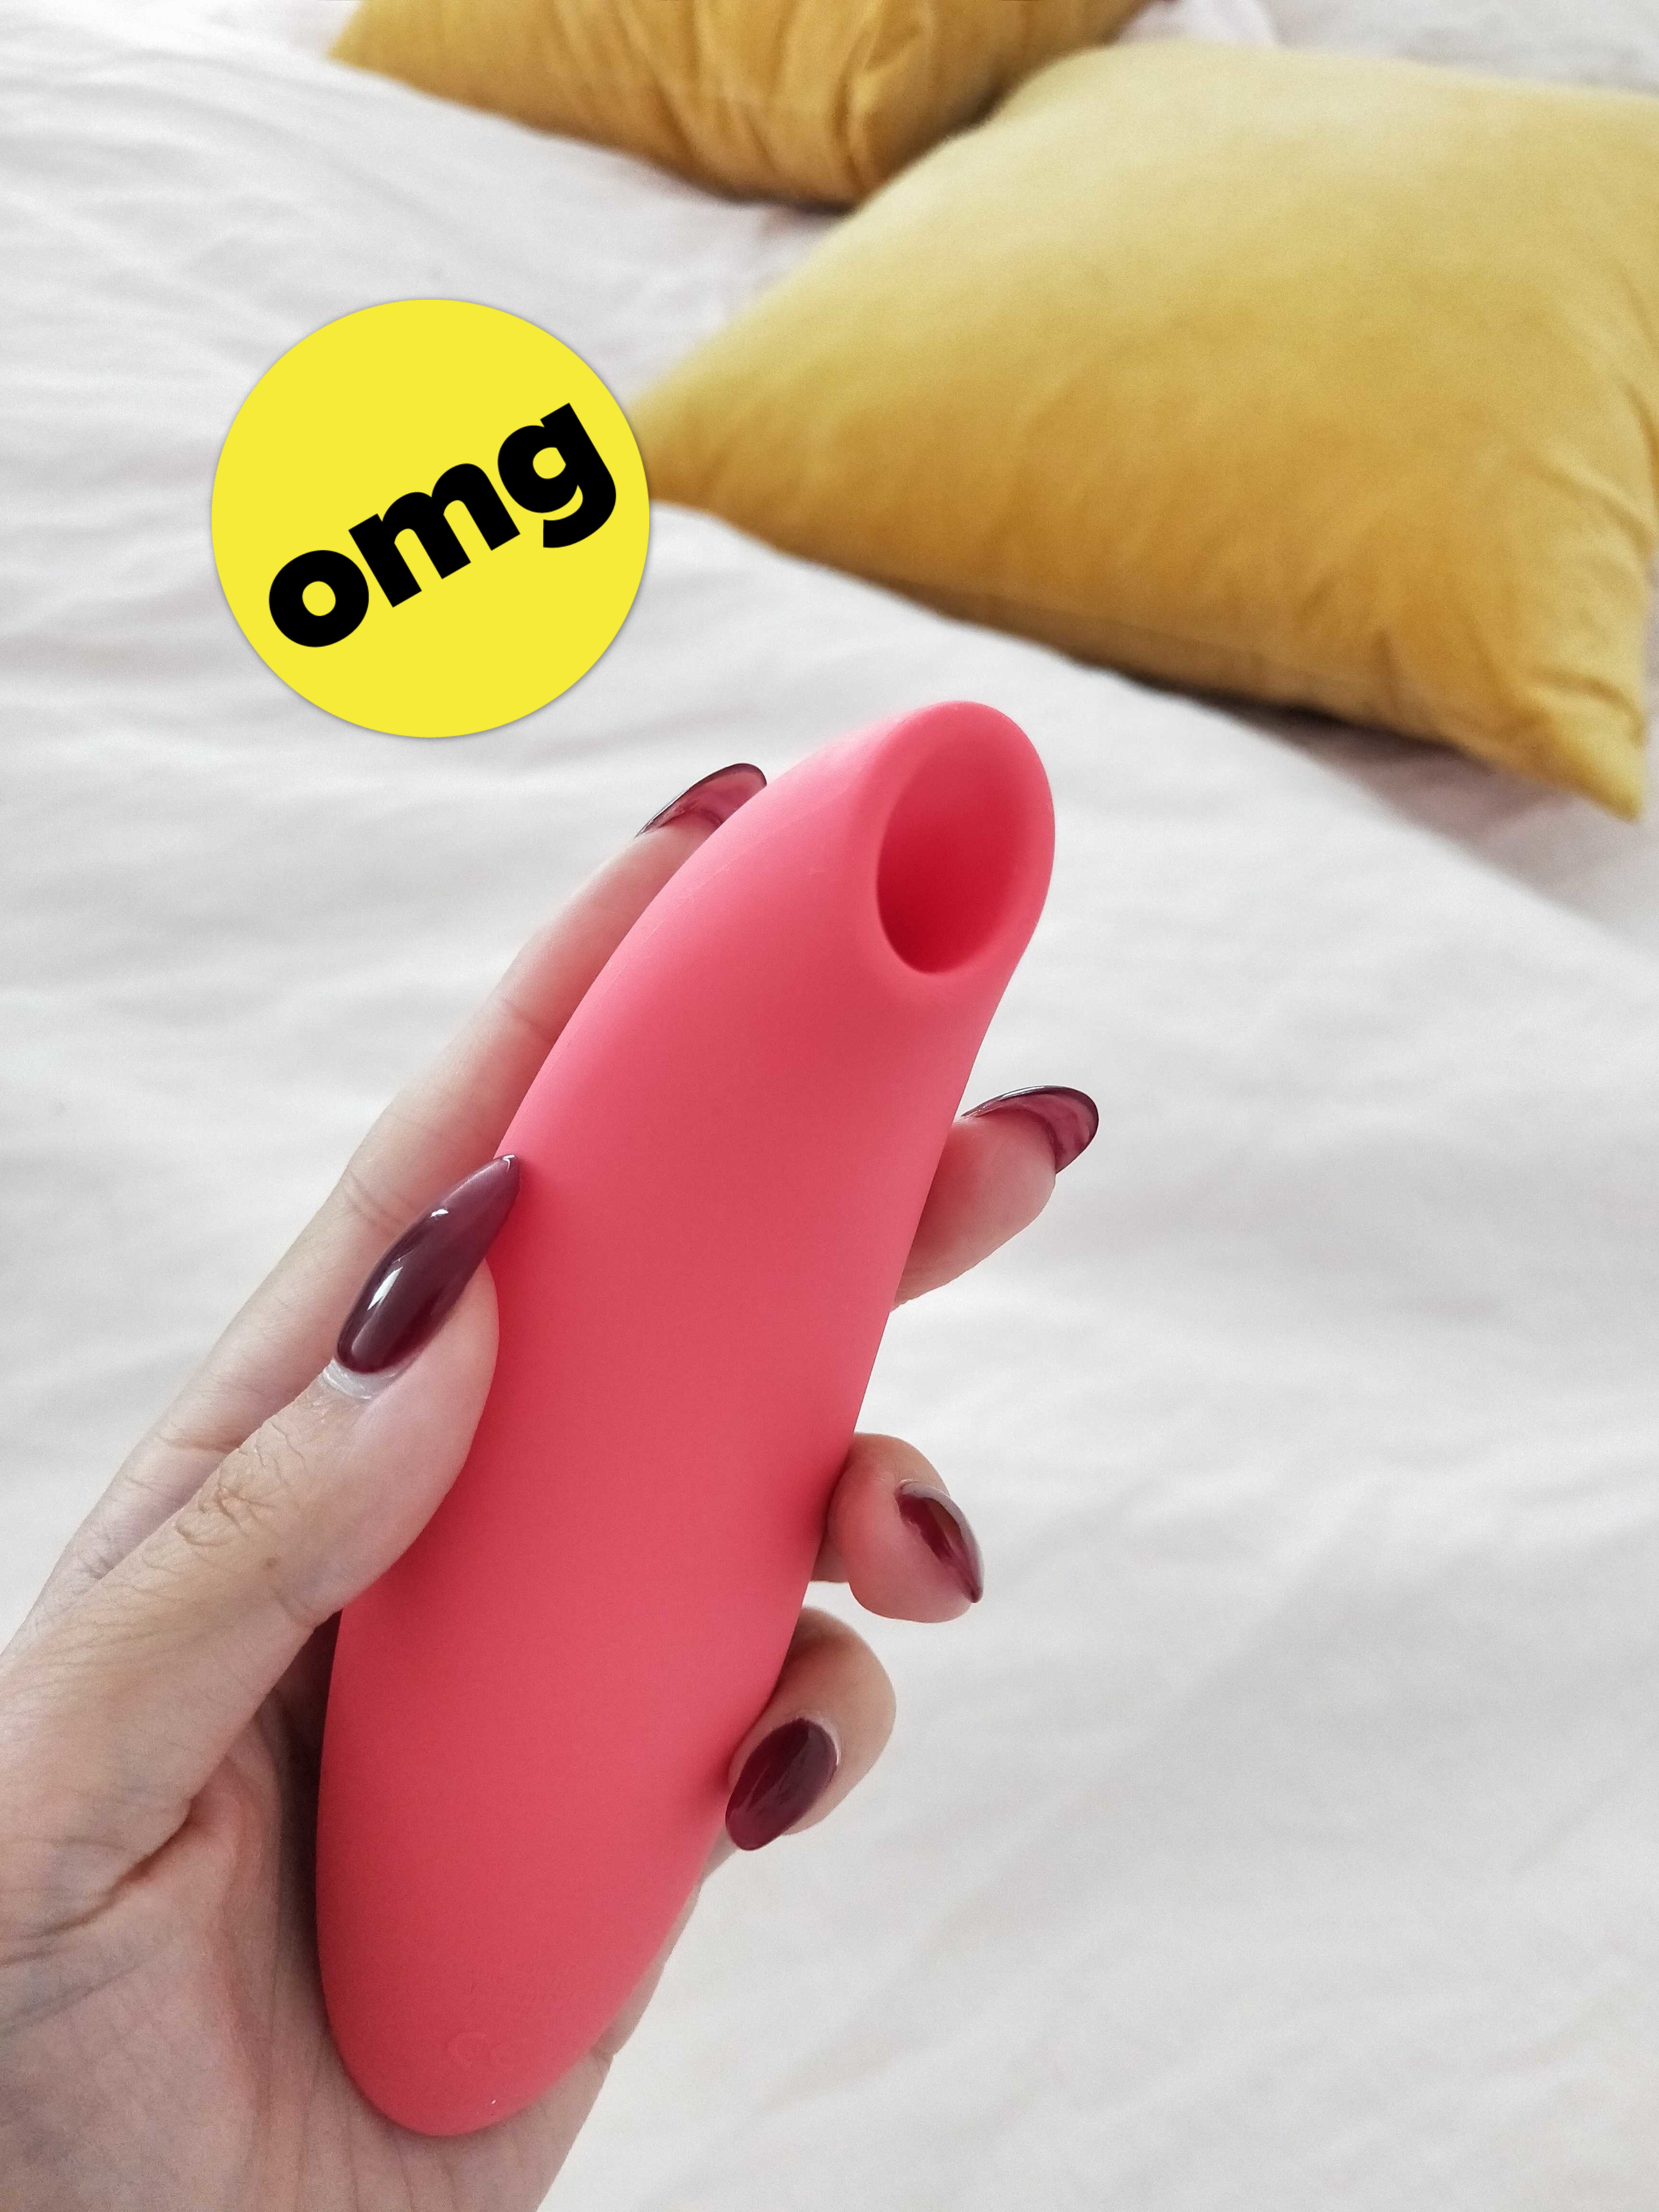 6 sex toys to help women achieve pleasure like no other - GadgetMatch